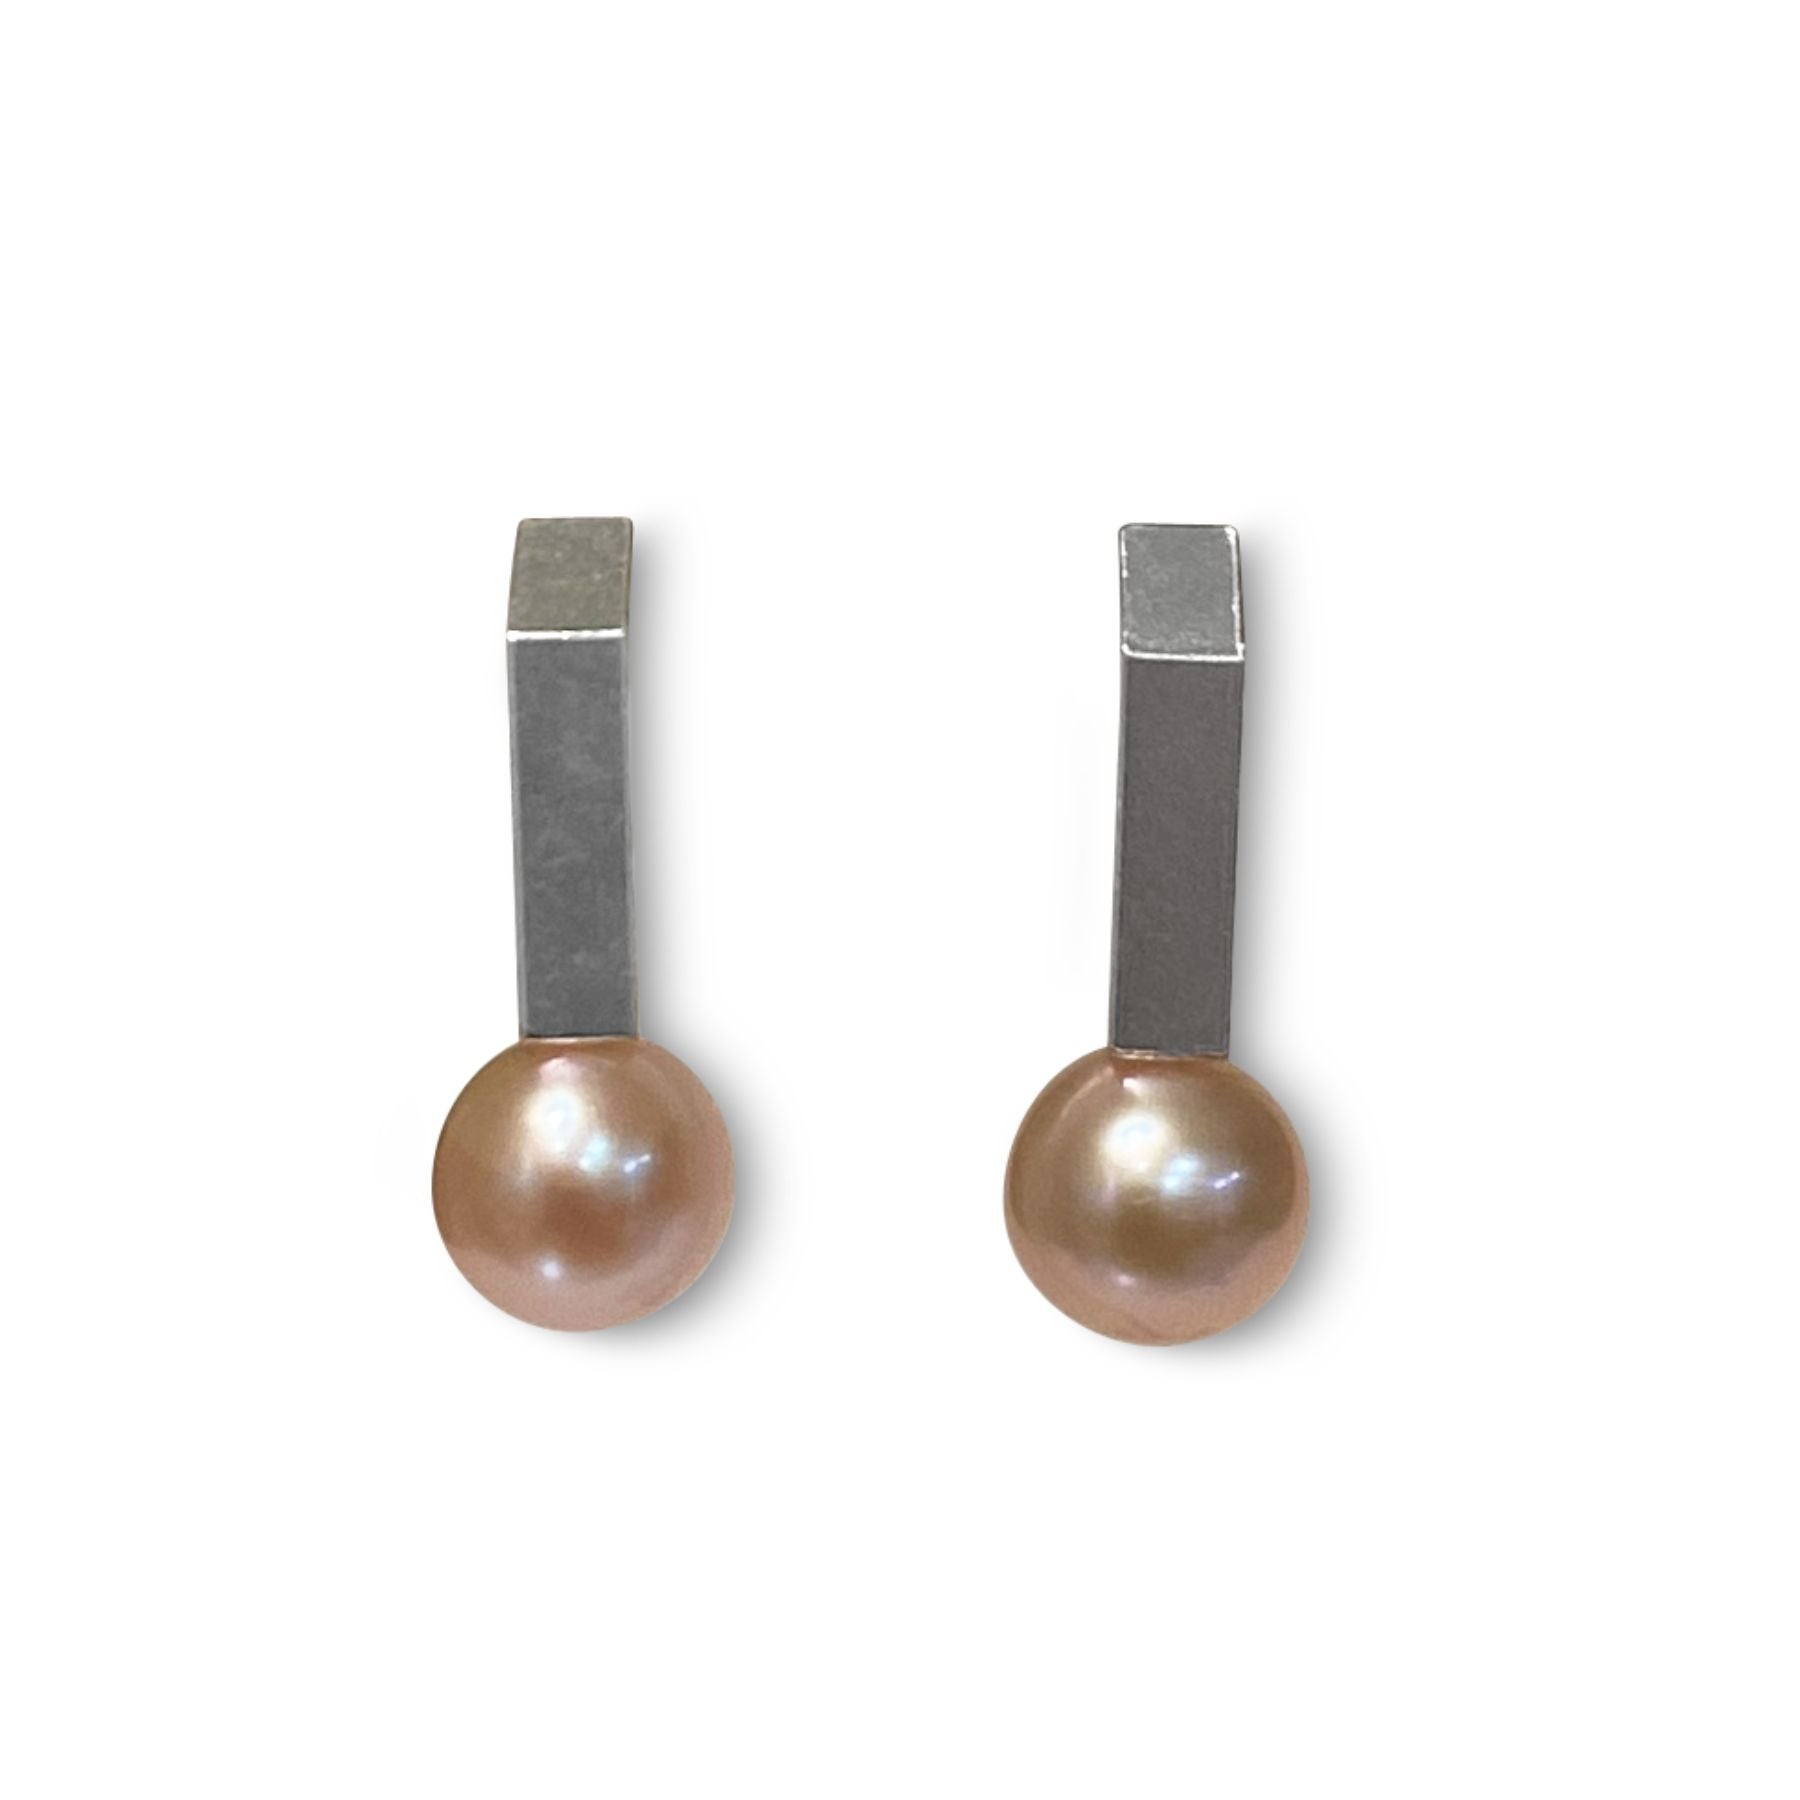 Rectangular Pearl Bar Earrings With Narrow Bar Bar Collection Pearls